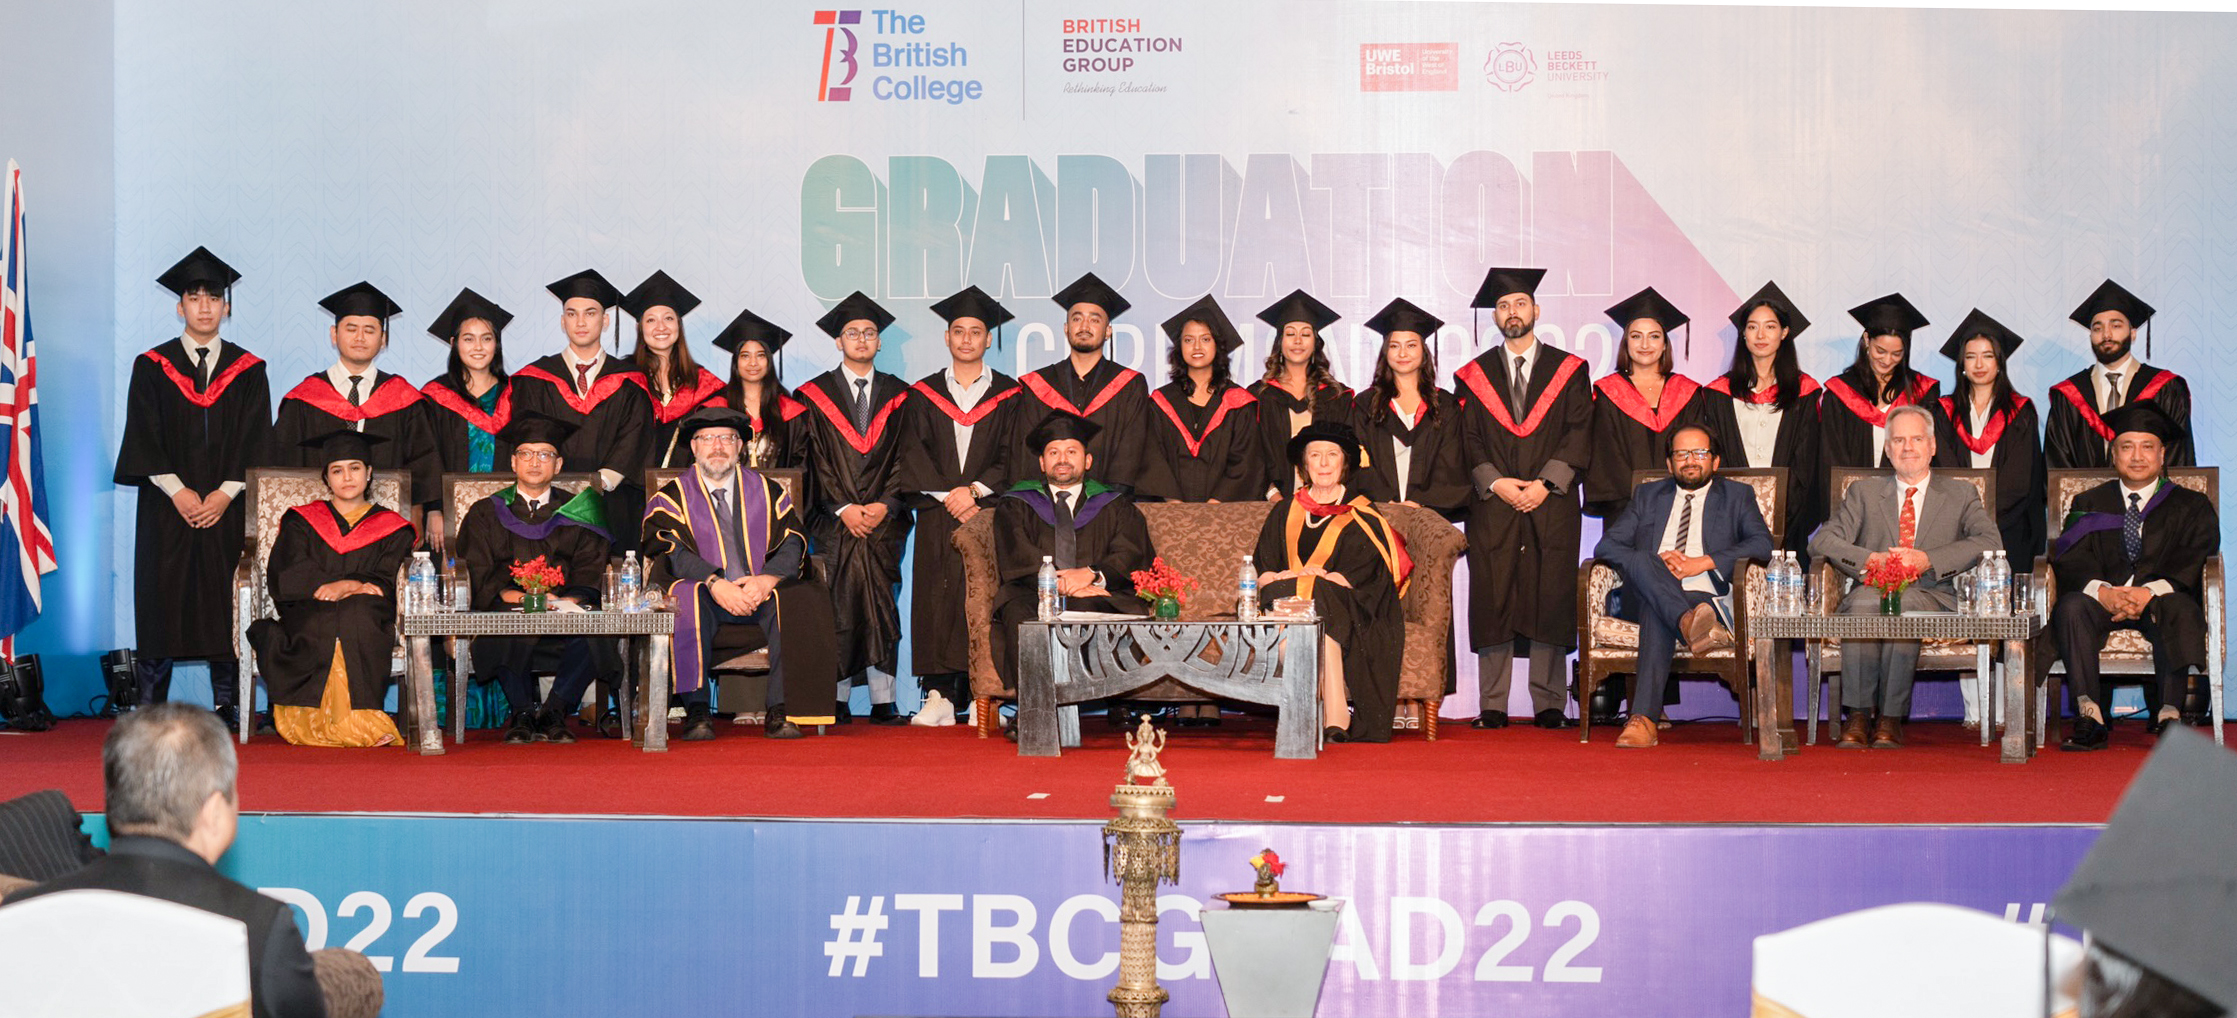 British College Graduation Ceremony 2022